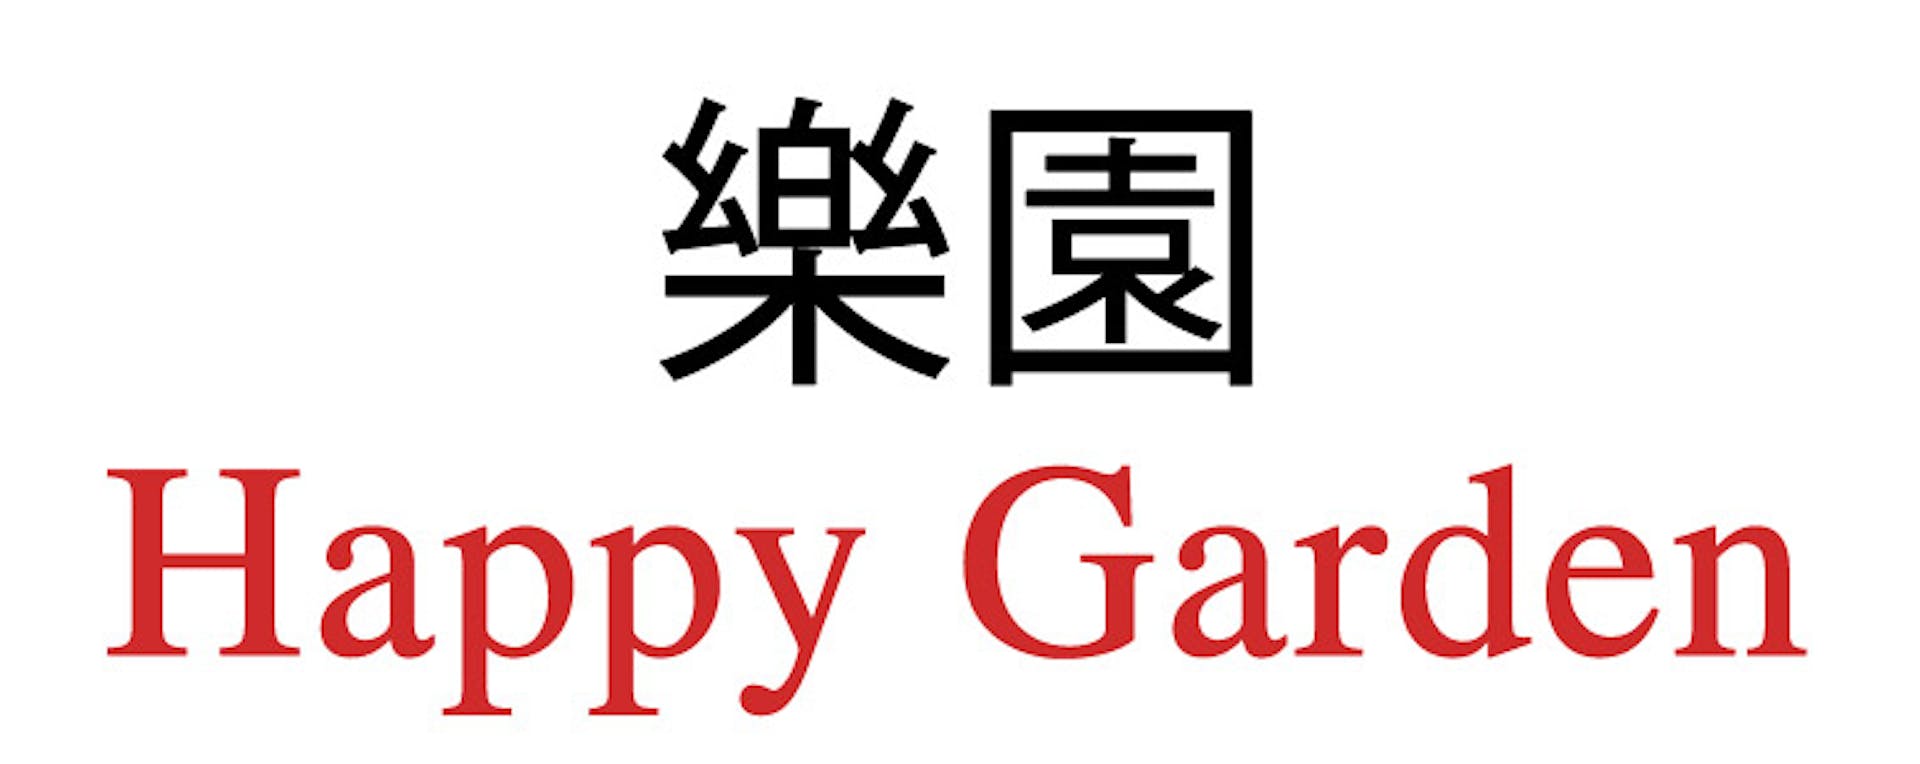 Happy Garden Revere Ma 02151 Menu Order Online